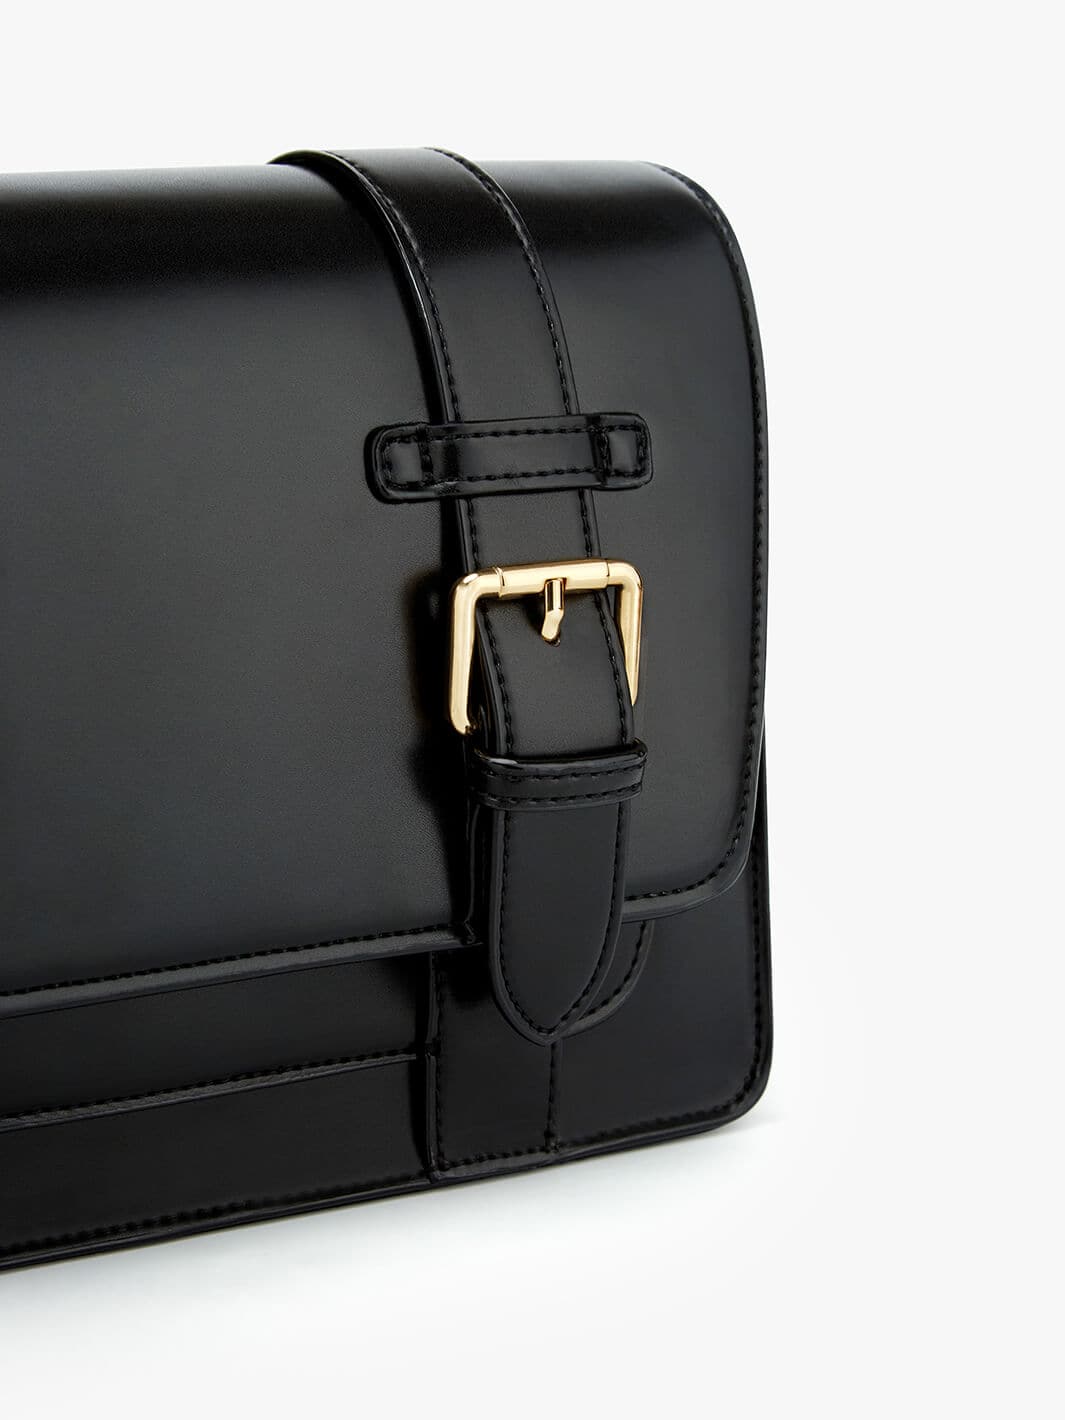 Black Messenger Bag with silver-tone (gold-tone for black) hardware